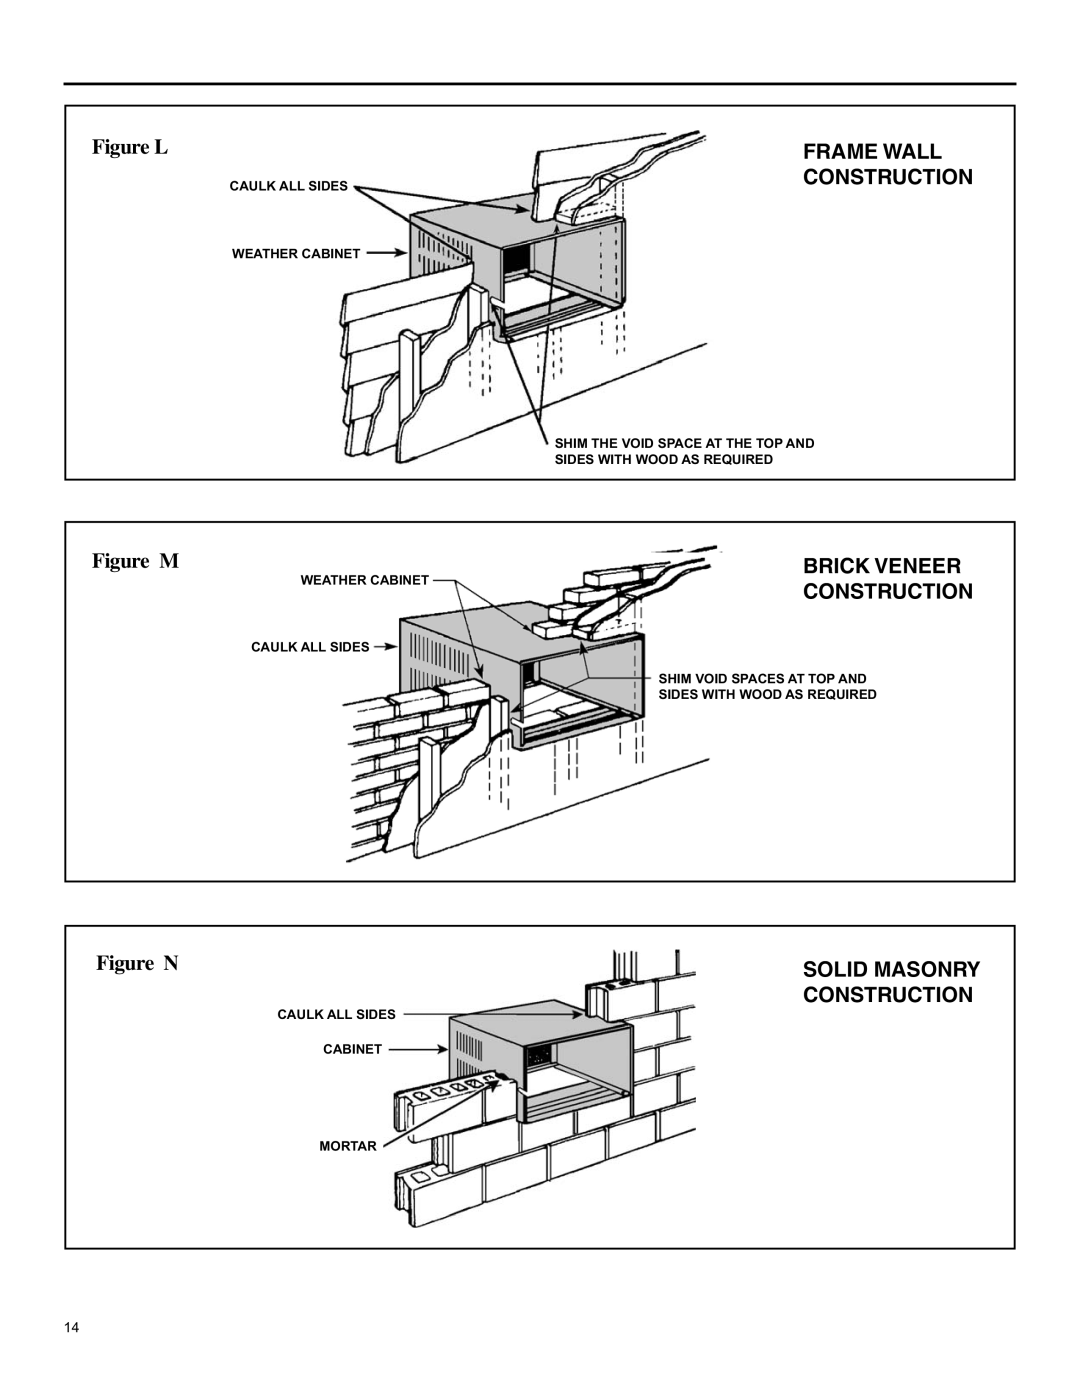 Friedrich SH15 Frame Wall Construction, Brick Veneer Construction, Solid Masonry, Figure L, Figure M, Figure N 